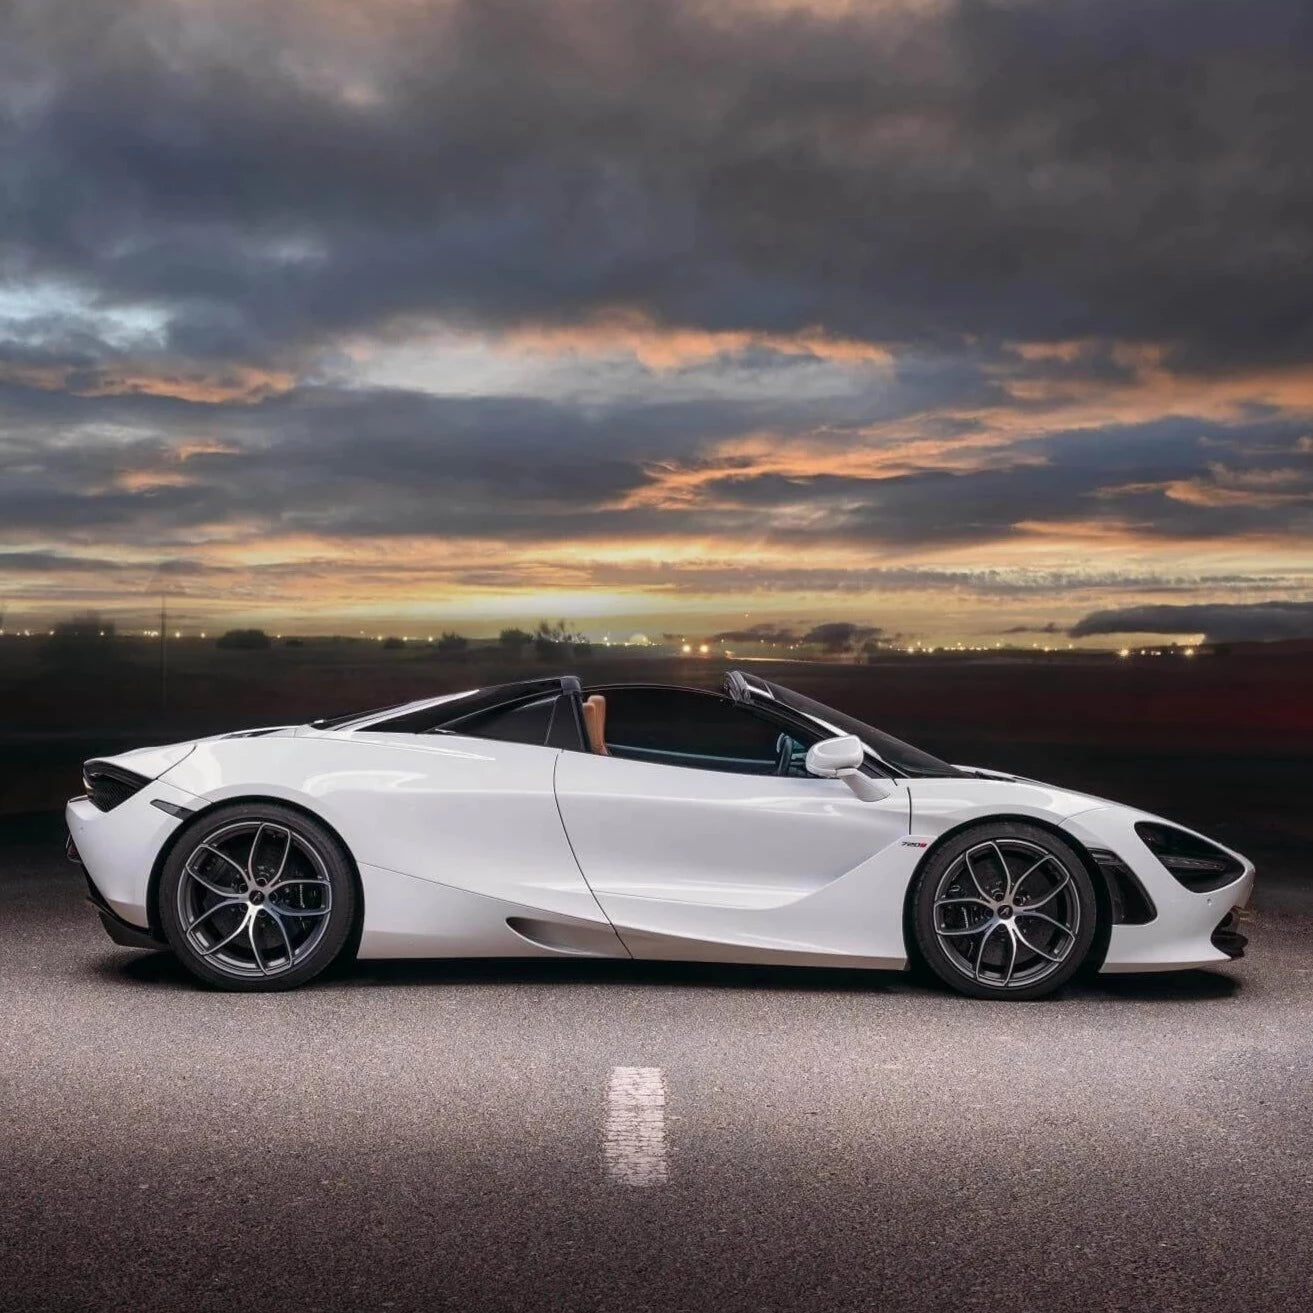 McLaren 720S 2020 (WHITE) five luxury car rental